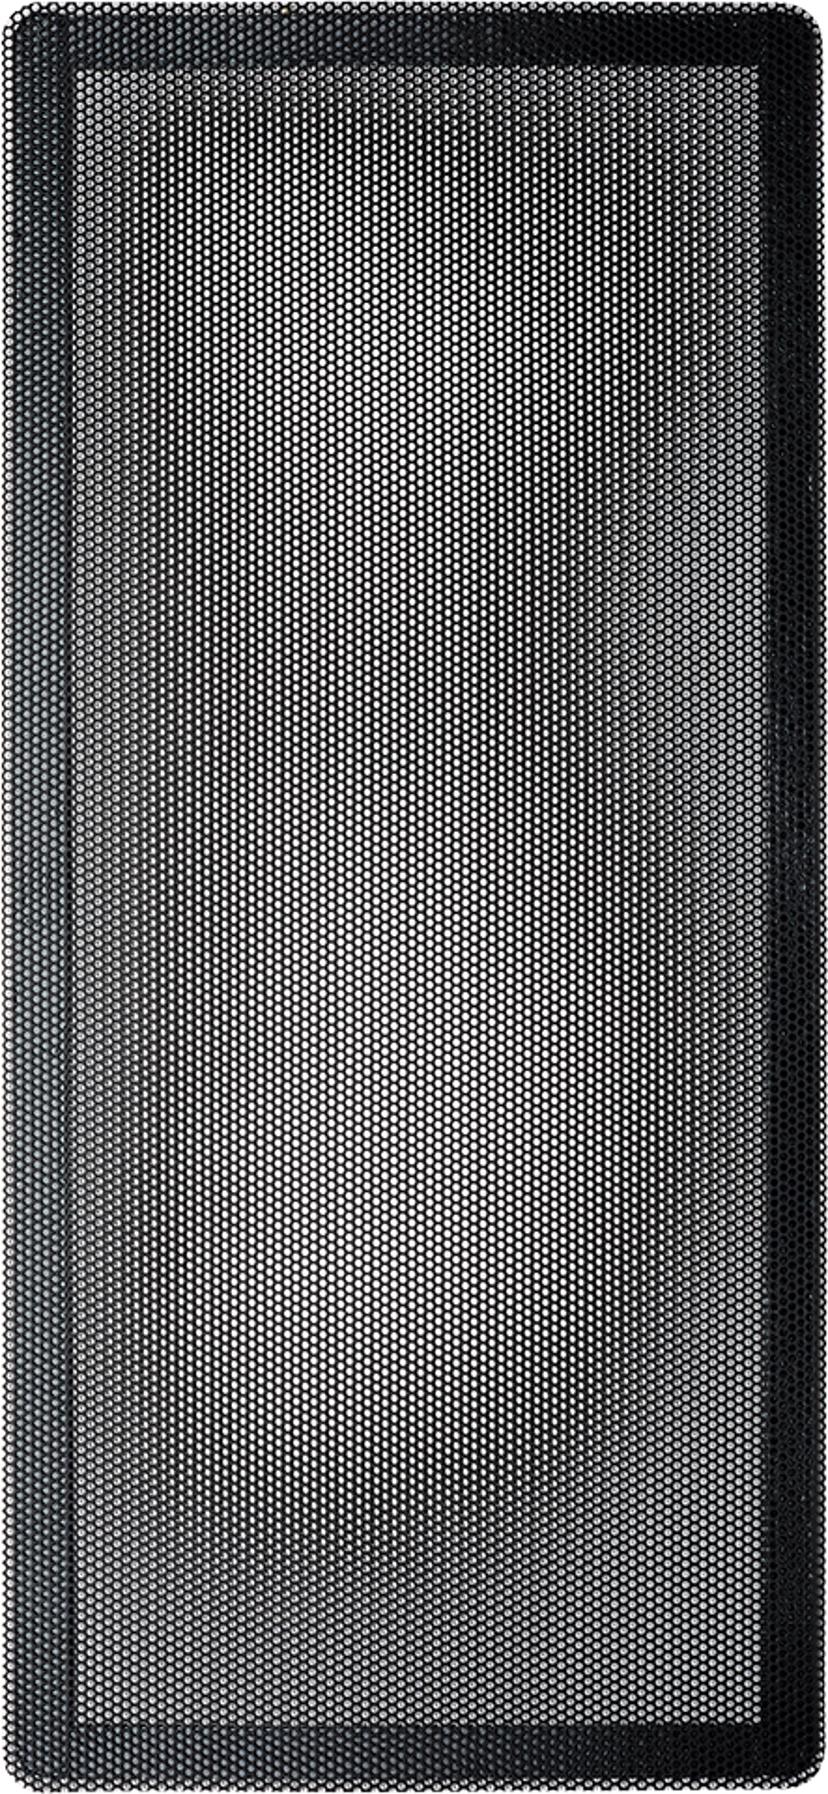 Corsair Carbide 275R top dust filter black